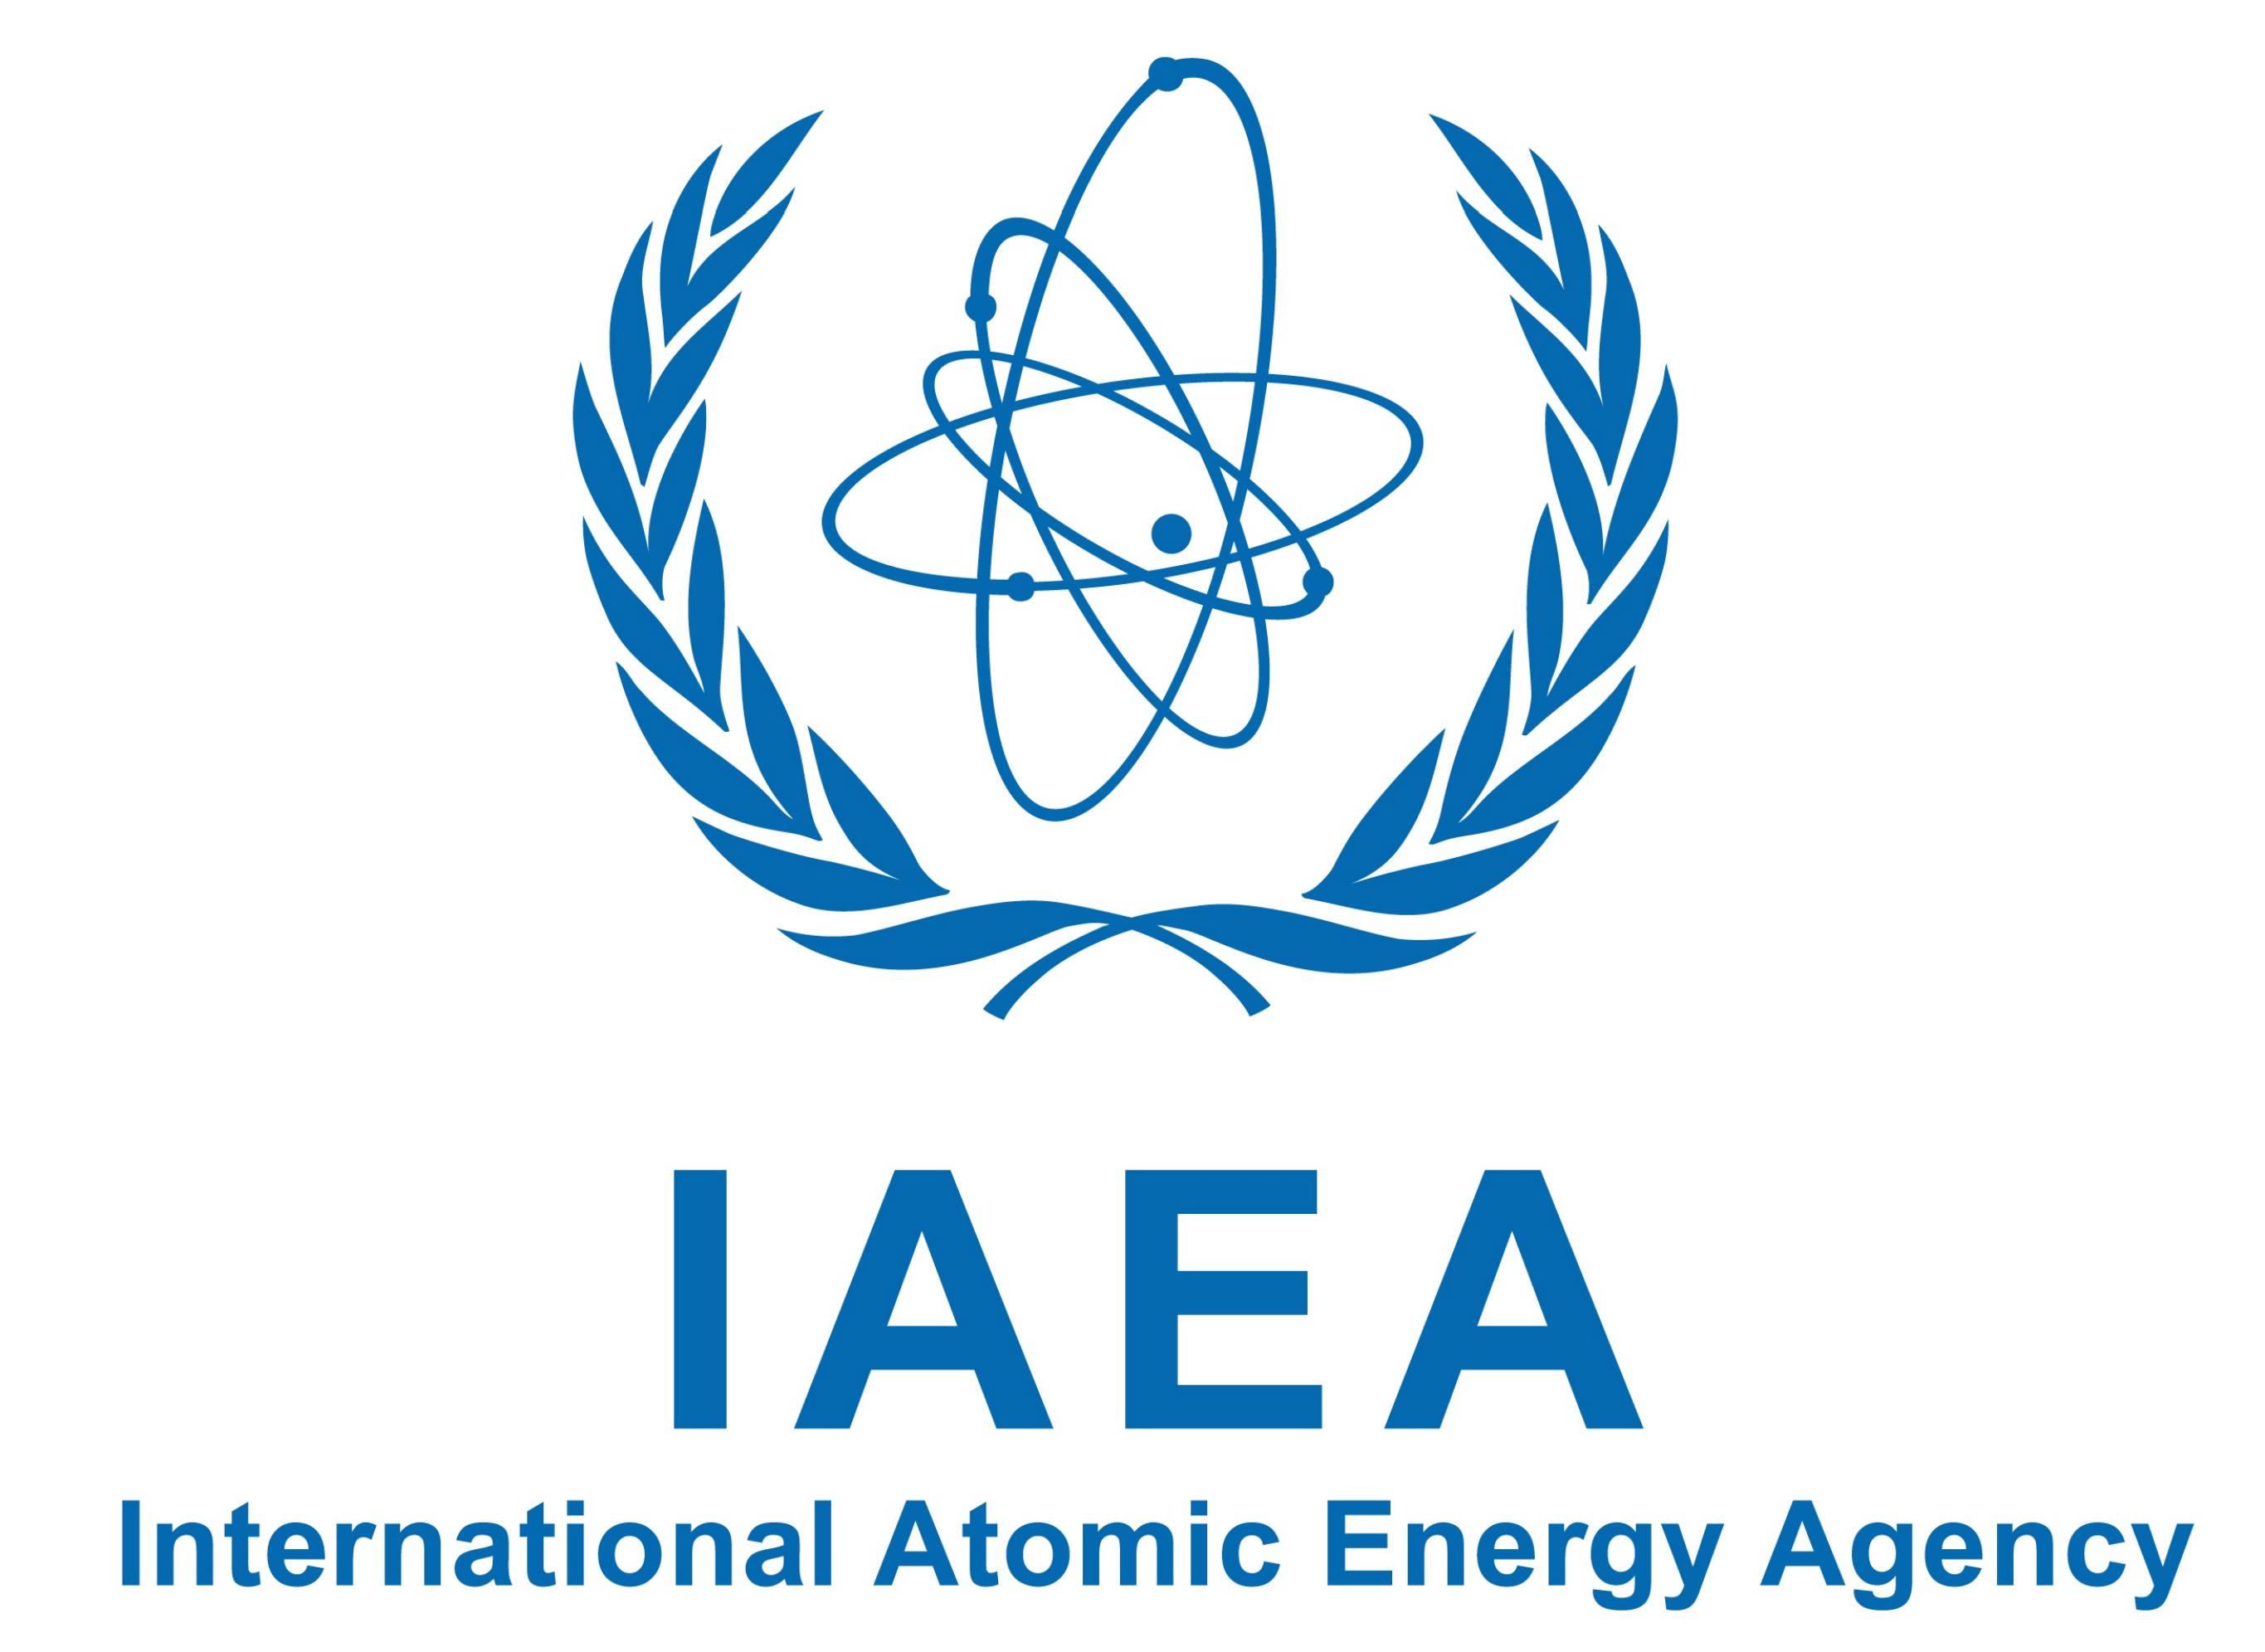 अंतर्राष्ट्रीय आणविक उर्जा विभाग International Atomic Energy Agency – IAEA